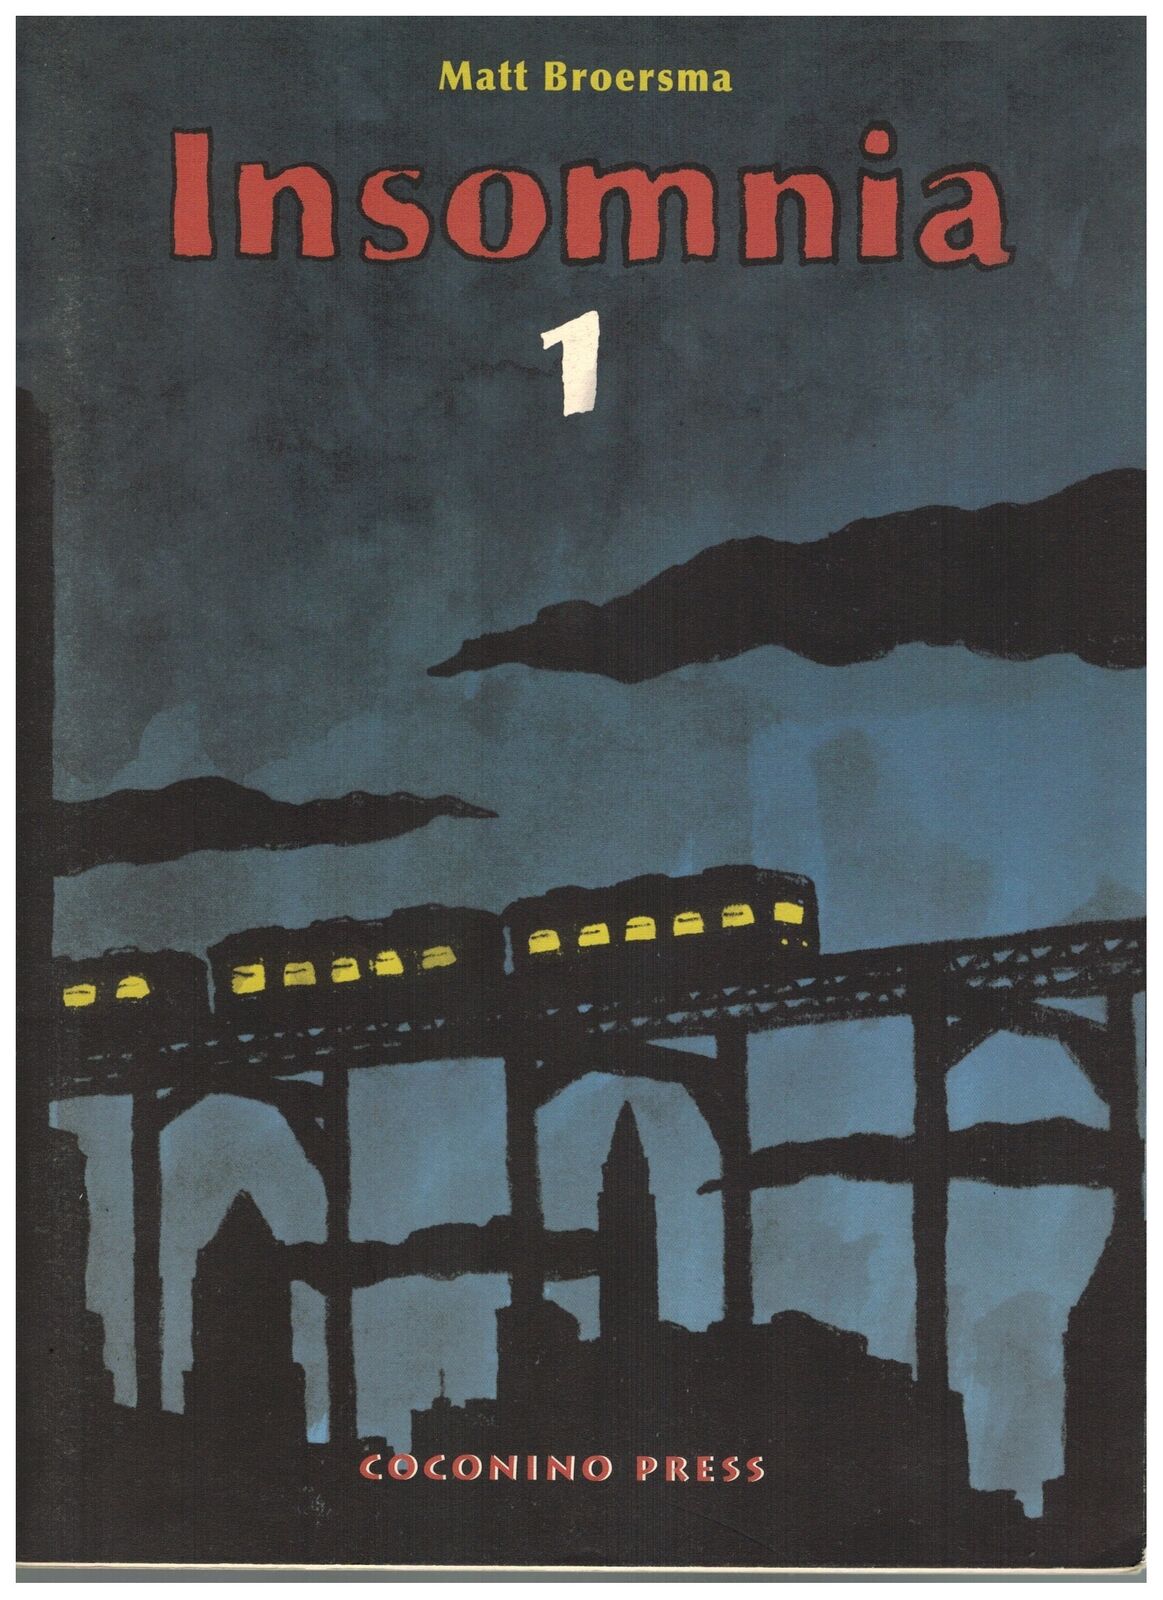 Insomnia 1 Matt Broersma 2005 Italian edition